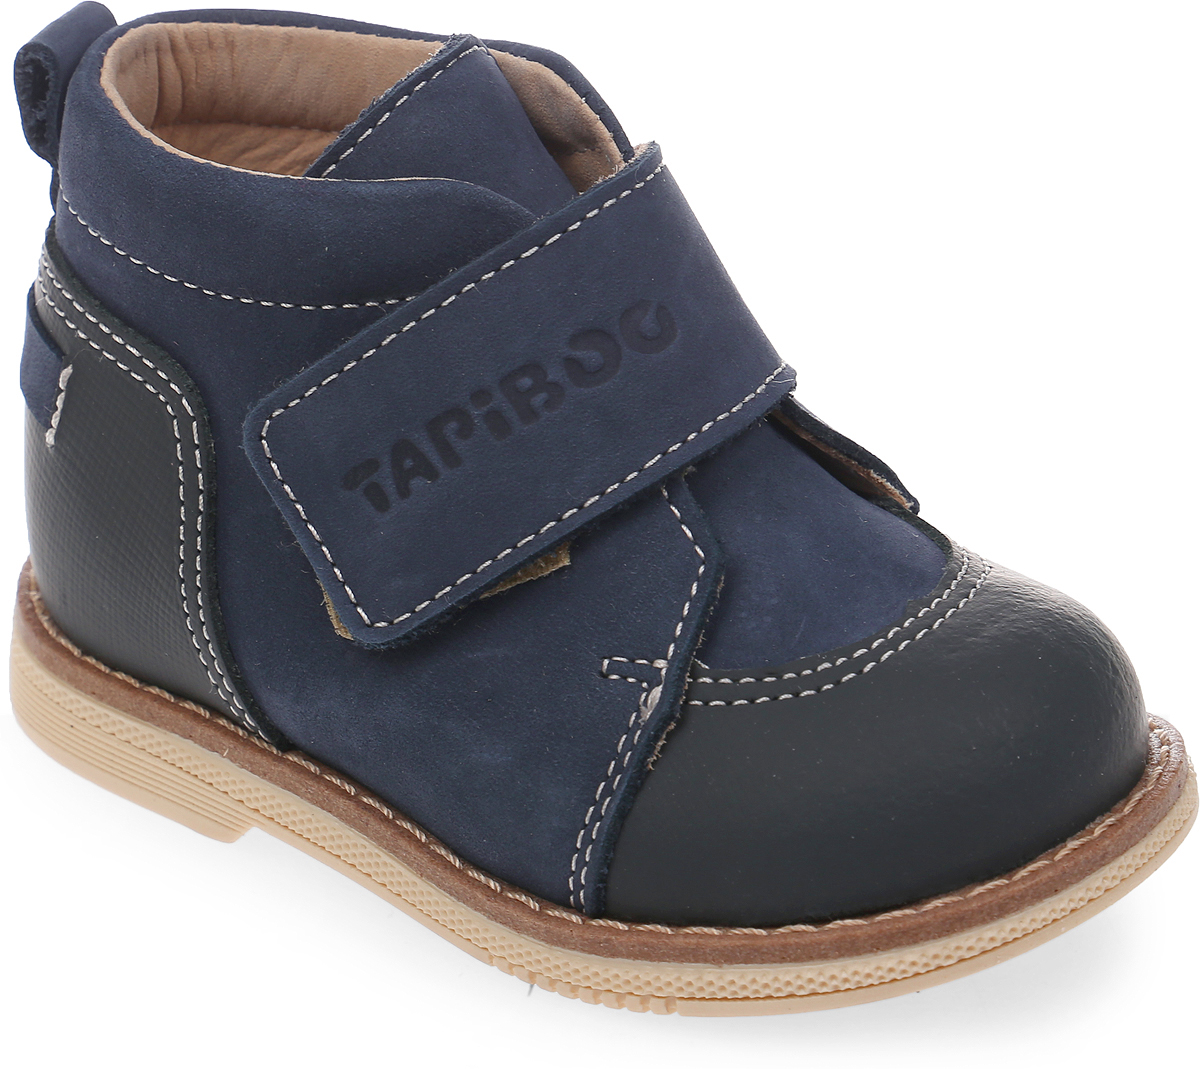 Ботинки для мальчика Tapiboo Ирис, цвет: синий. FT-24015.18-OL08O.01. Размер 18